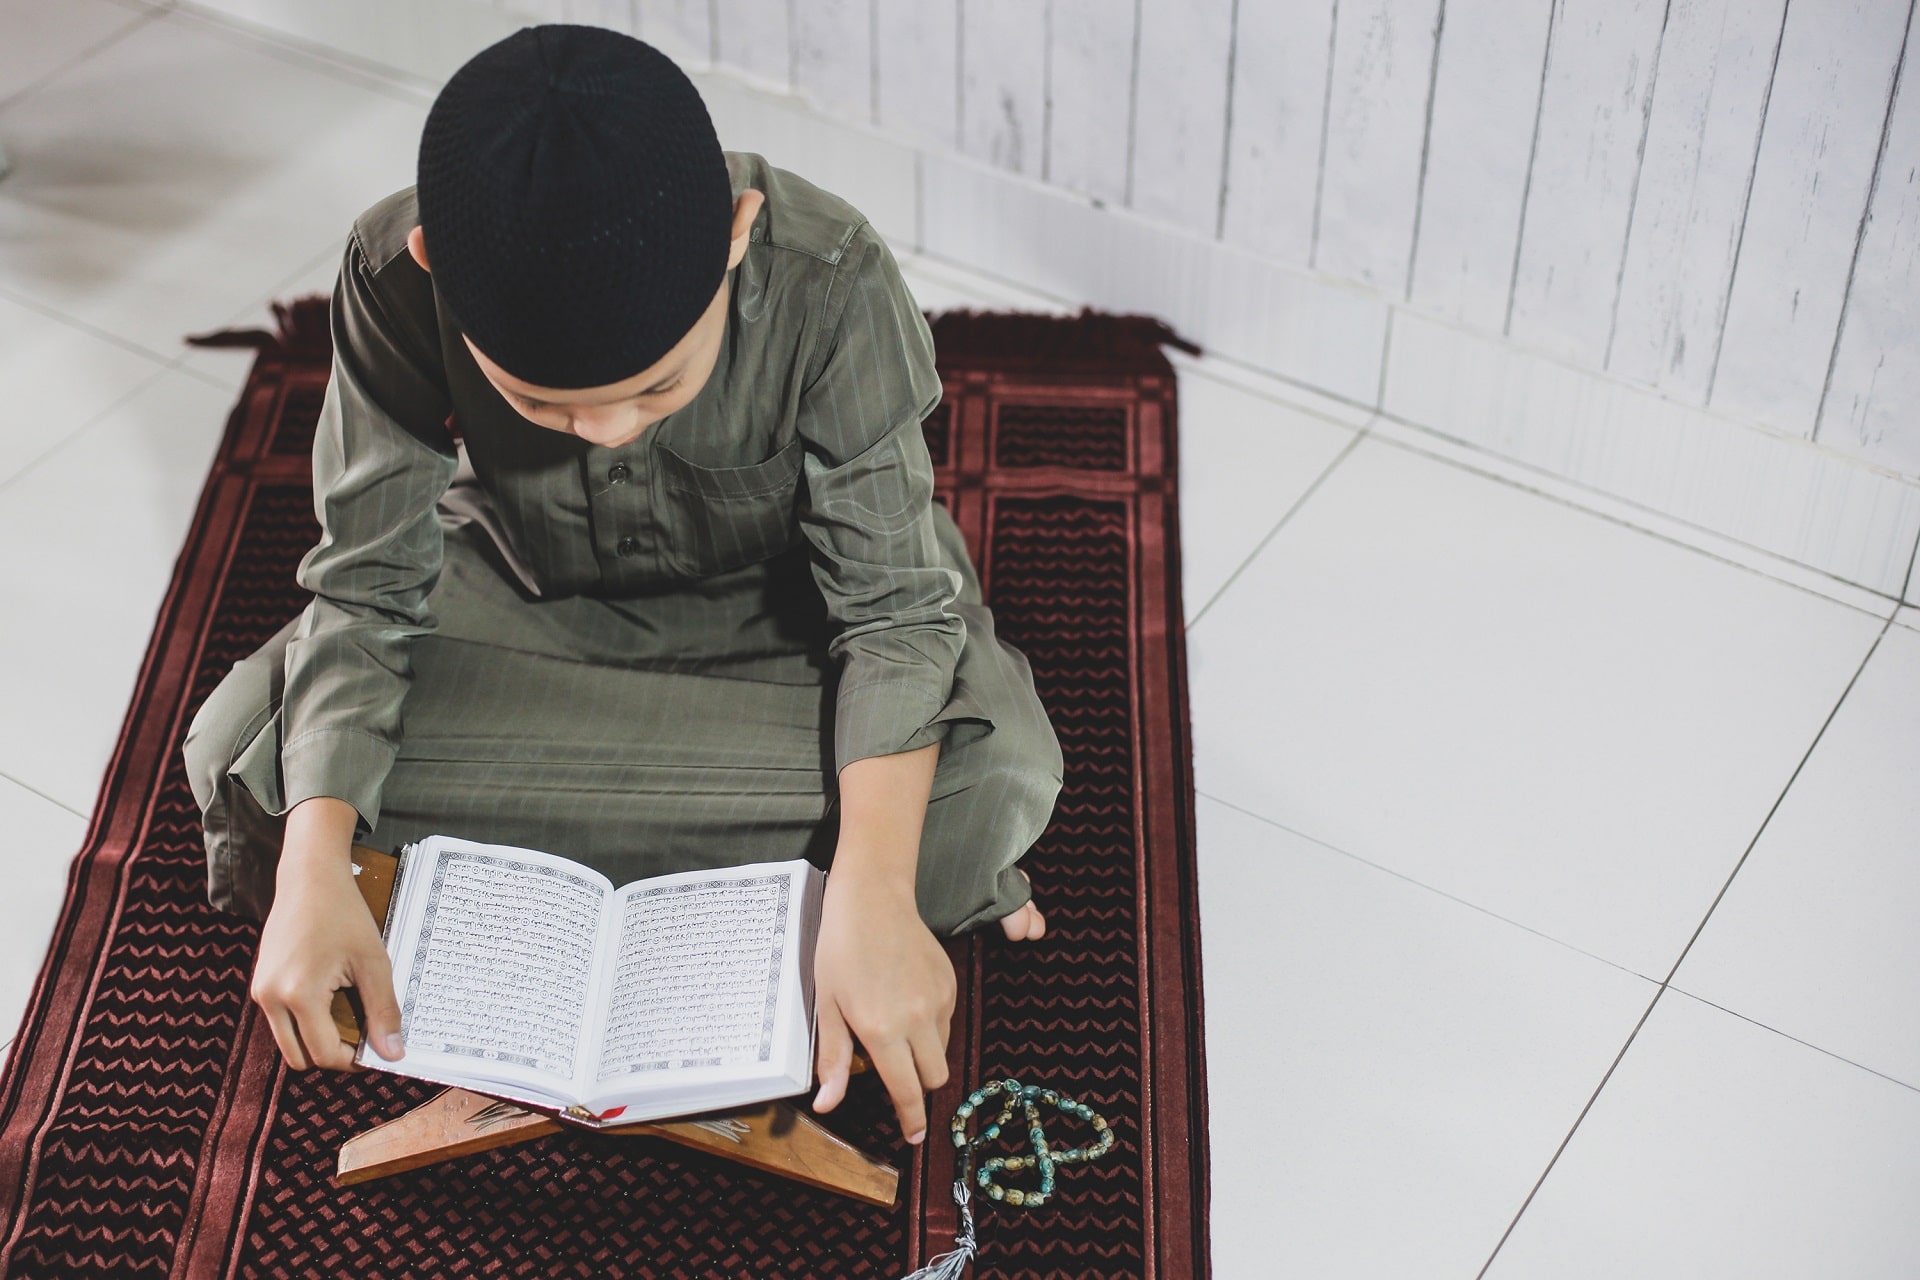 muslim-boy-reading-holy-quran-2021-08-30-06-01-29-utc-min.jpg